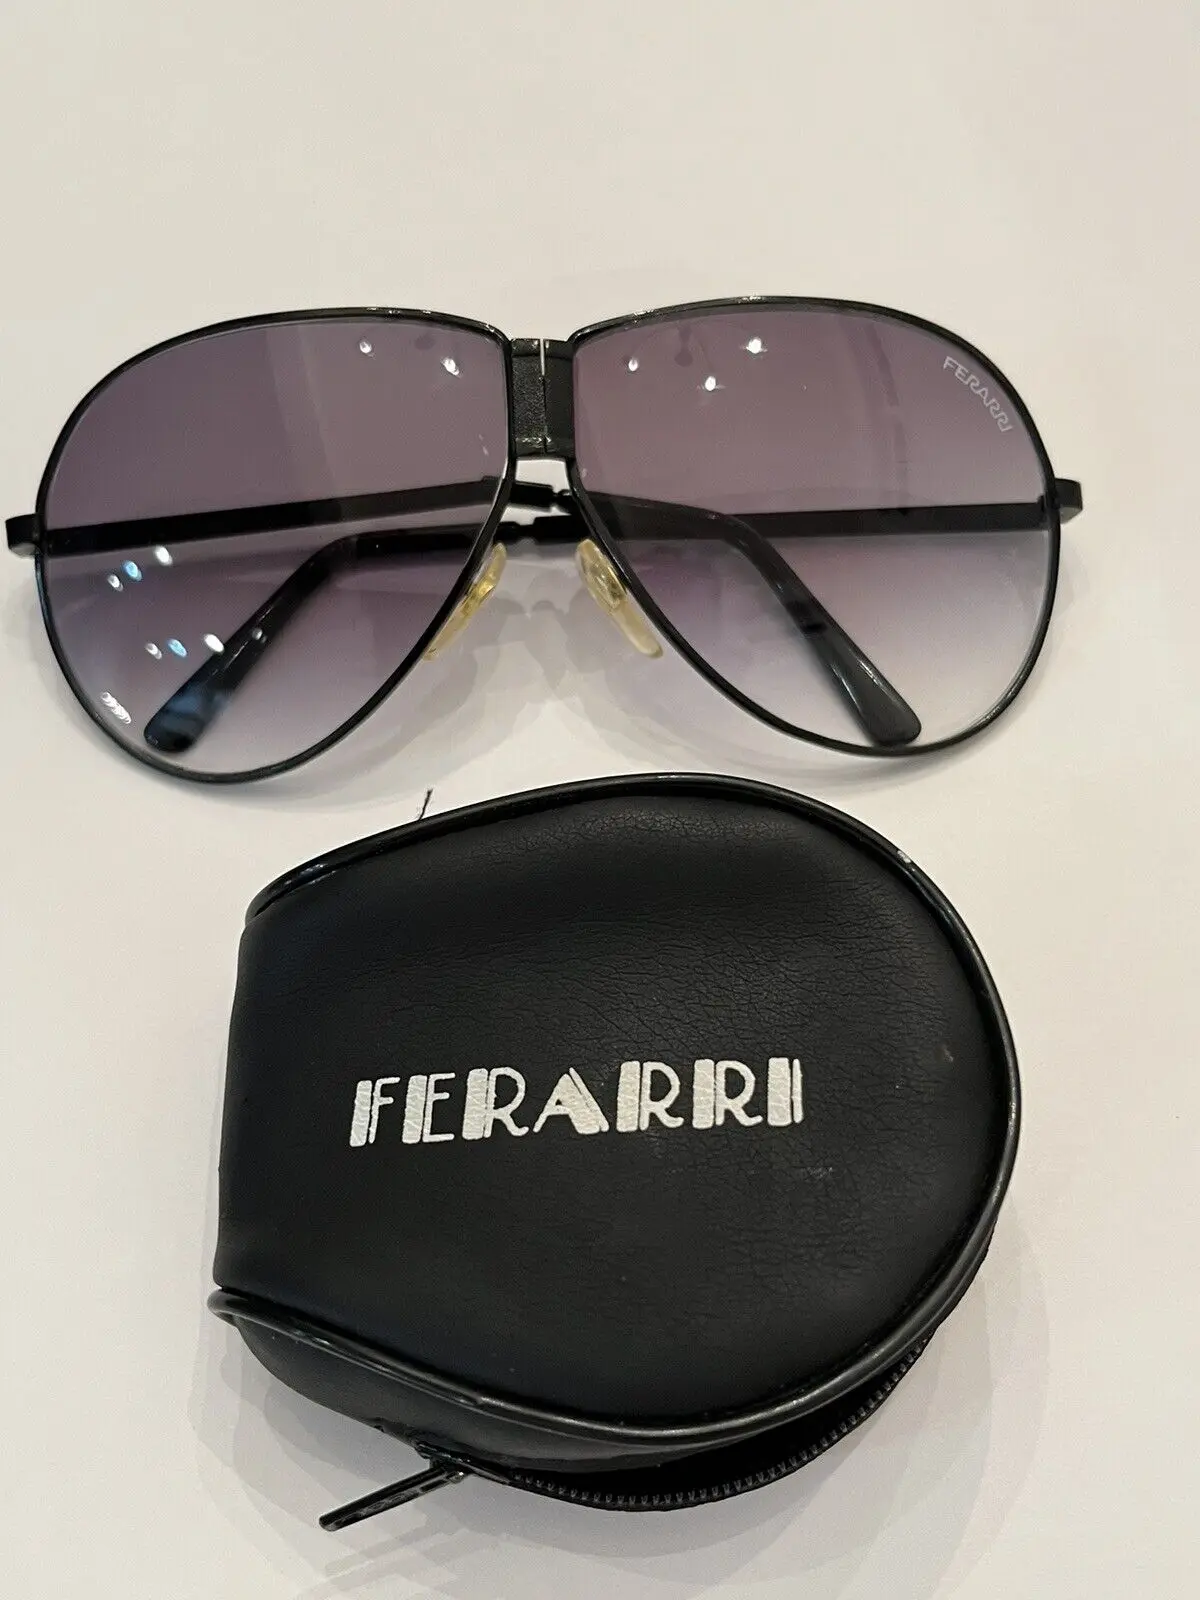 ferrari folding sunglasses - What glasses did Carroll Shelby wear